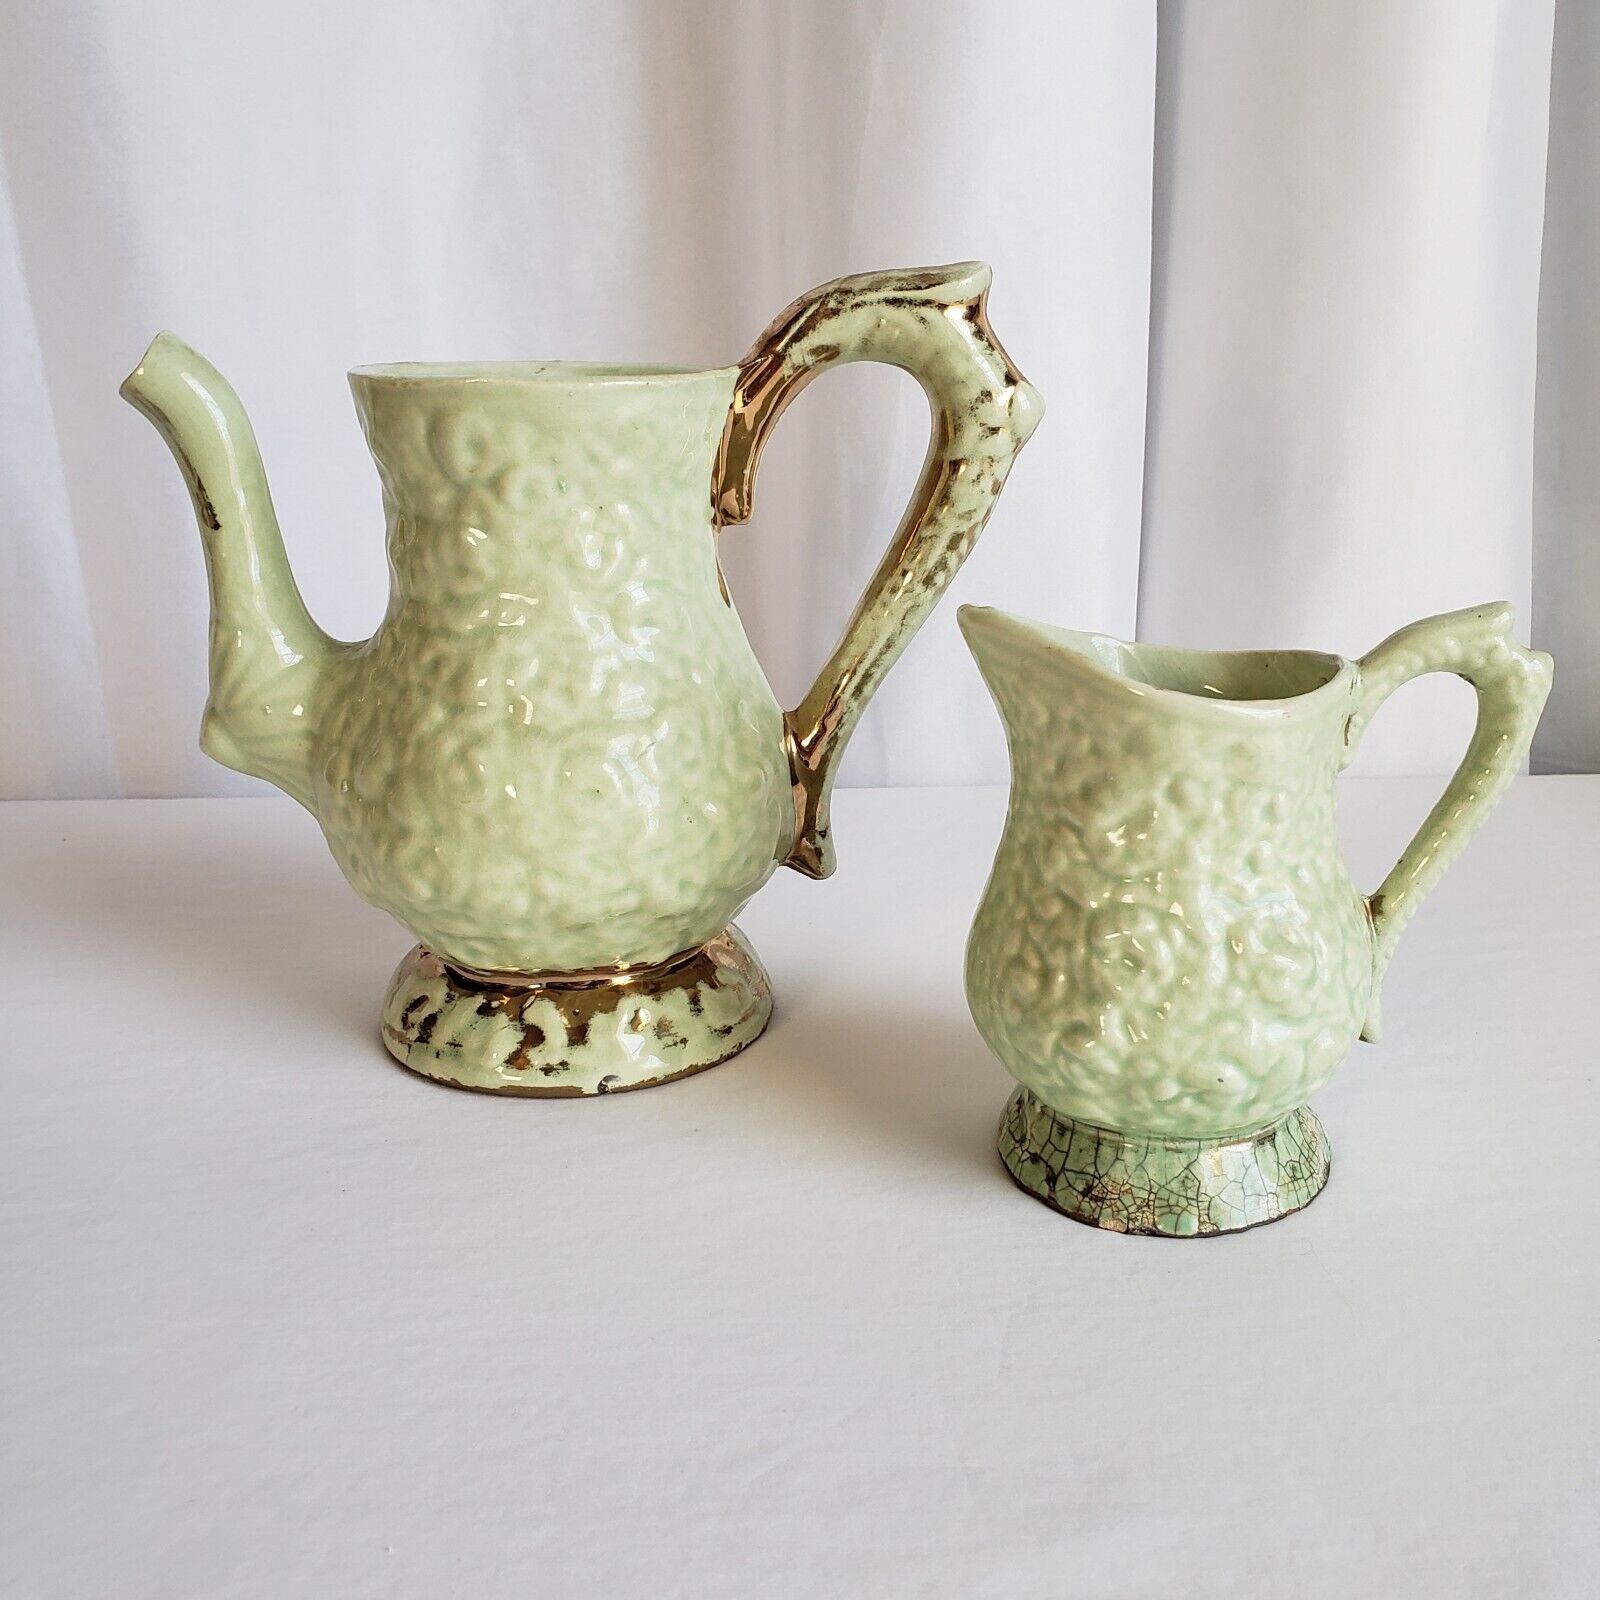 Vintage Green Ceramic Embossed Floral Teapot (missing lid) And Creamer